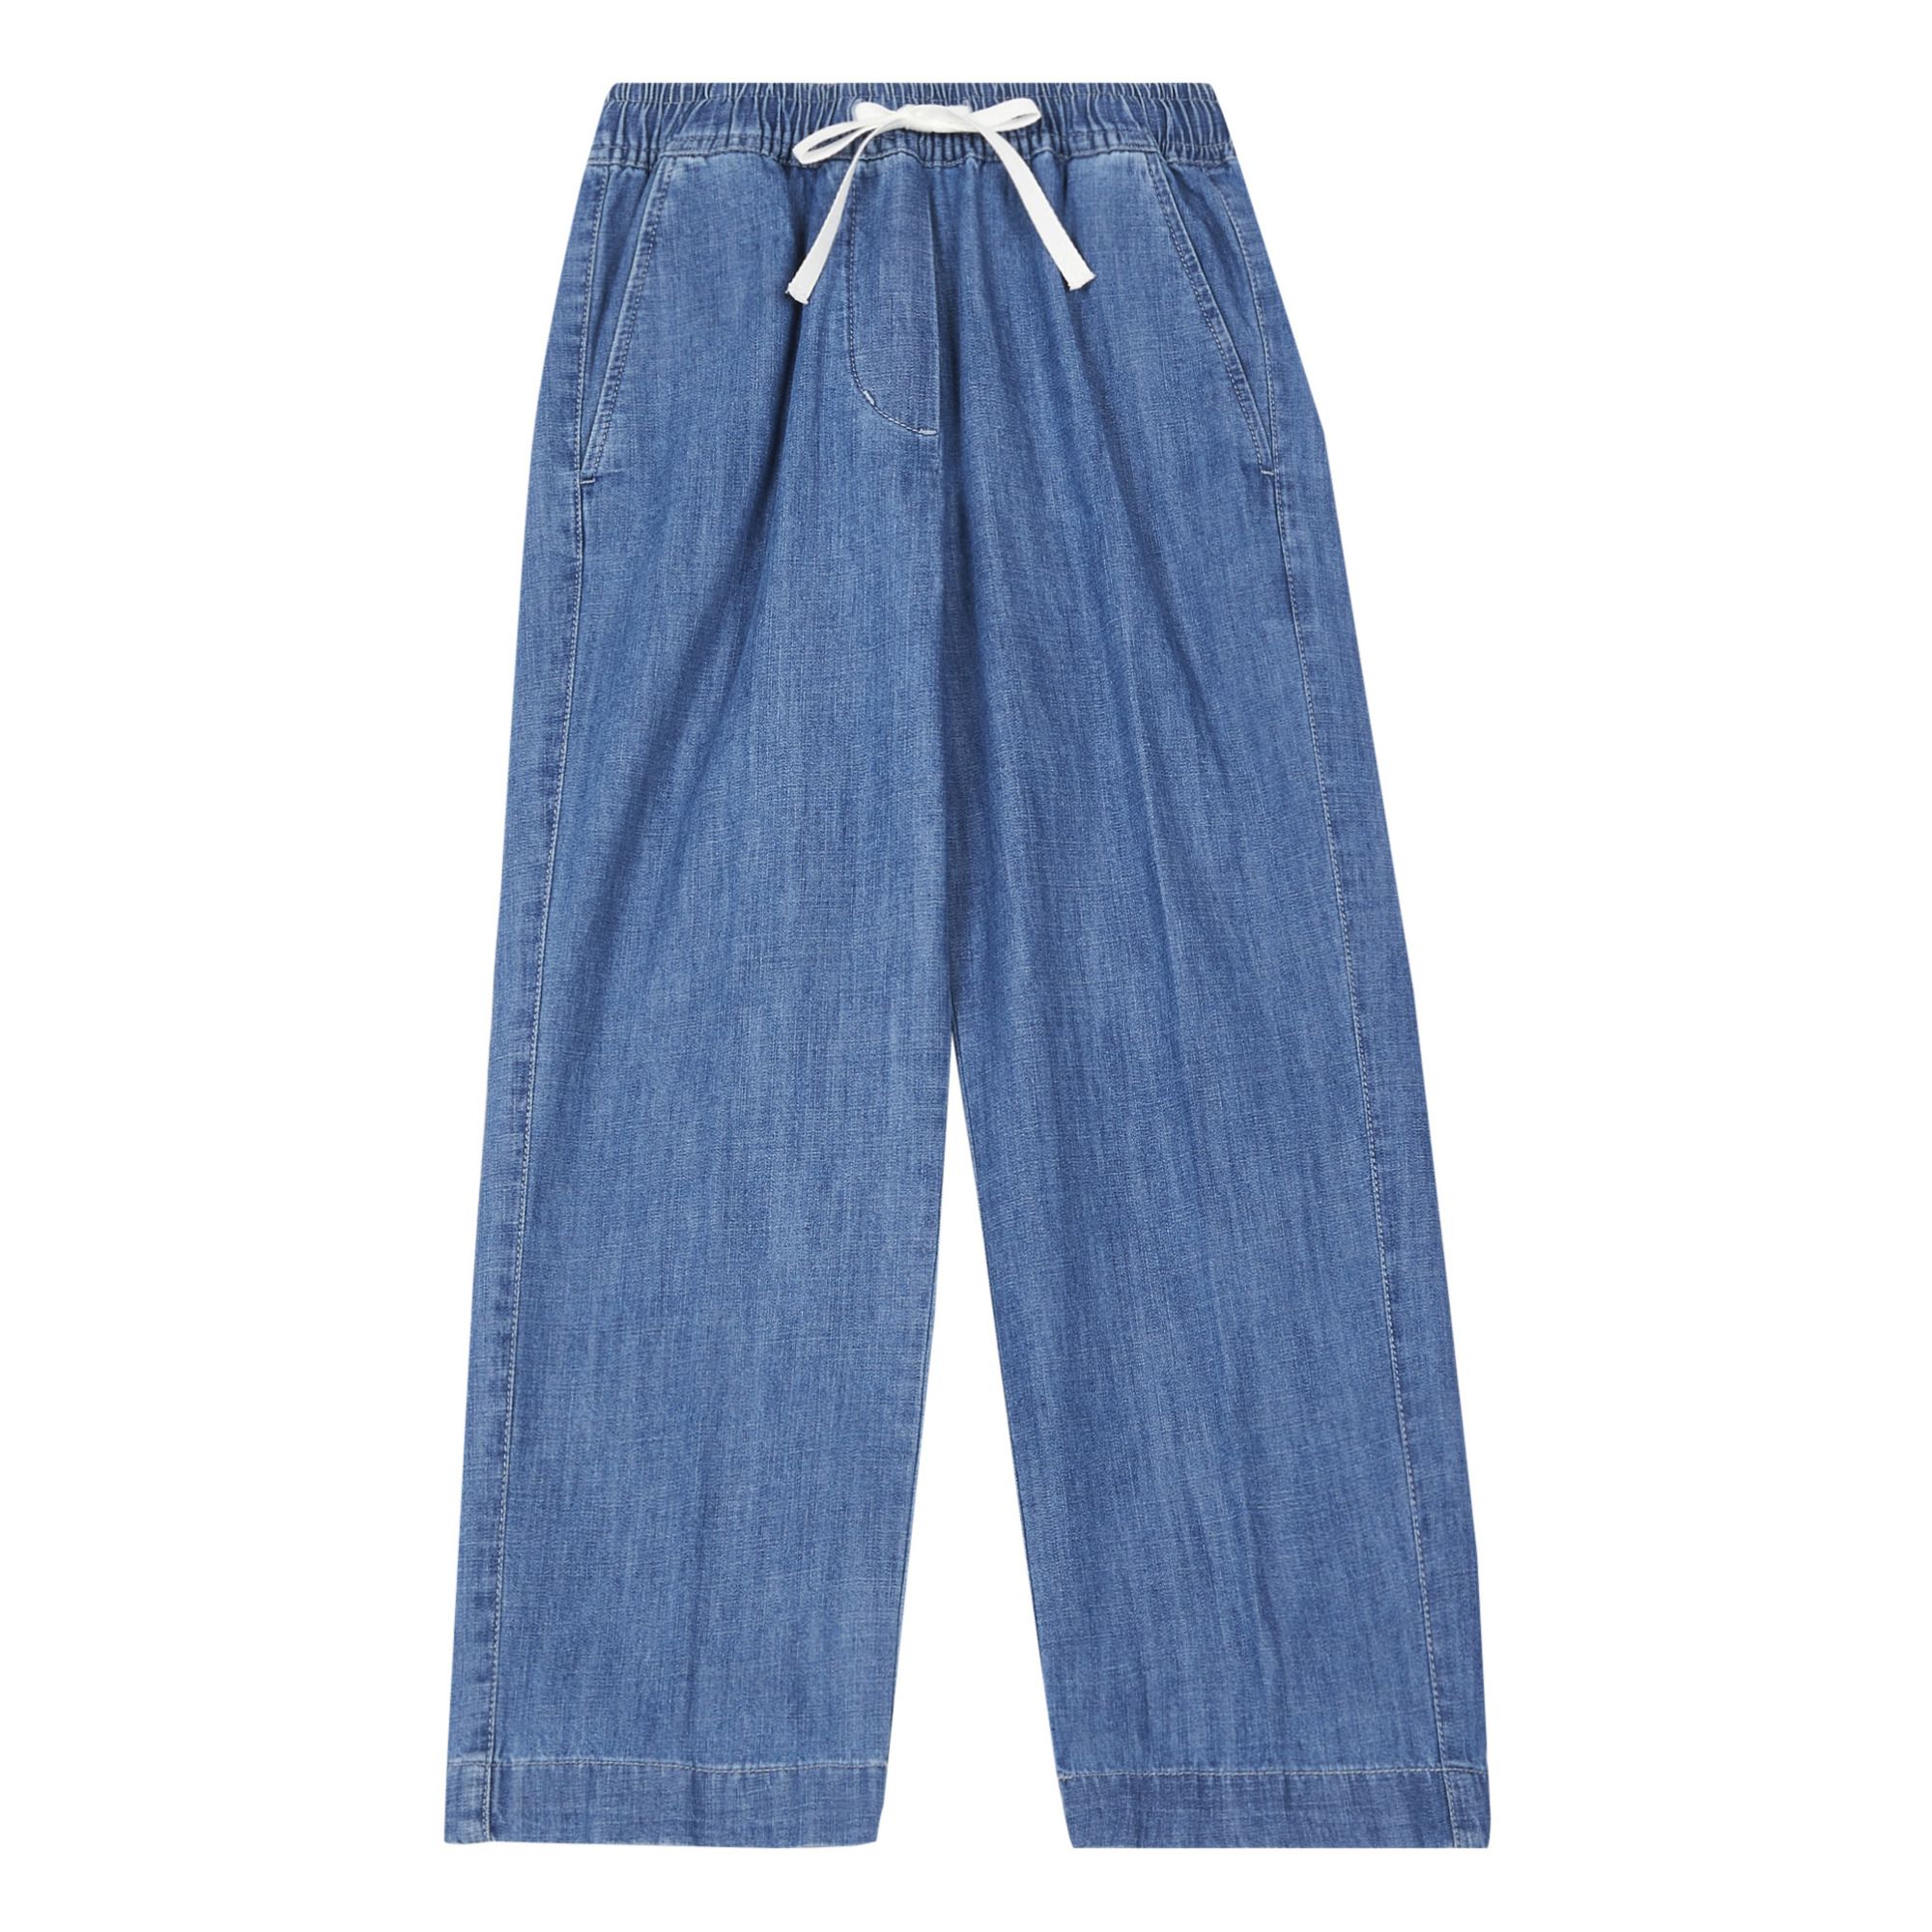 Hartford - Pantalon Denim Droit Pavel - Fille - Bleu jean